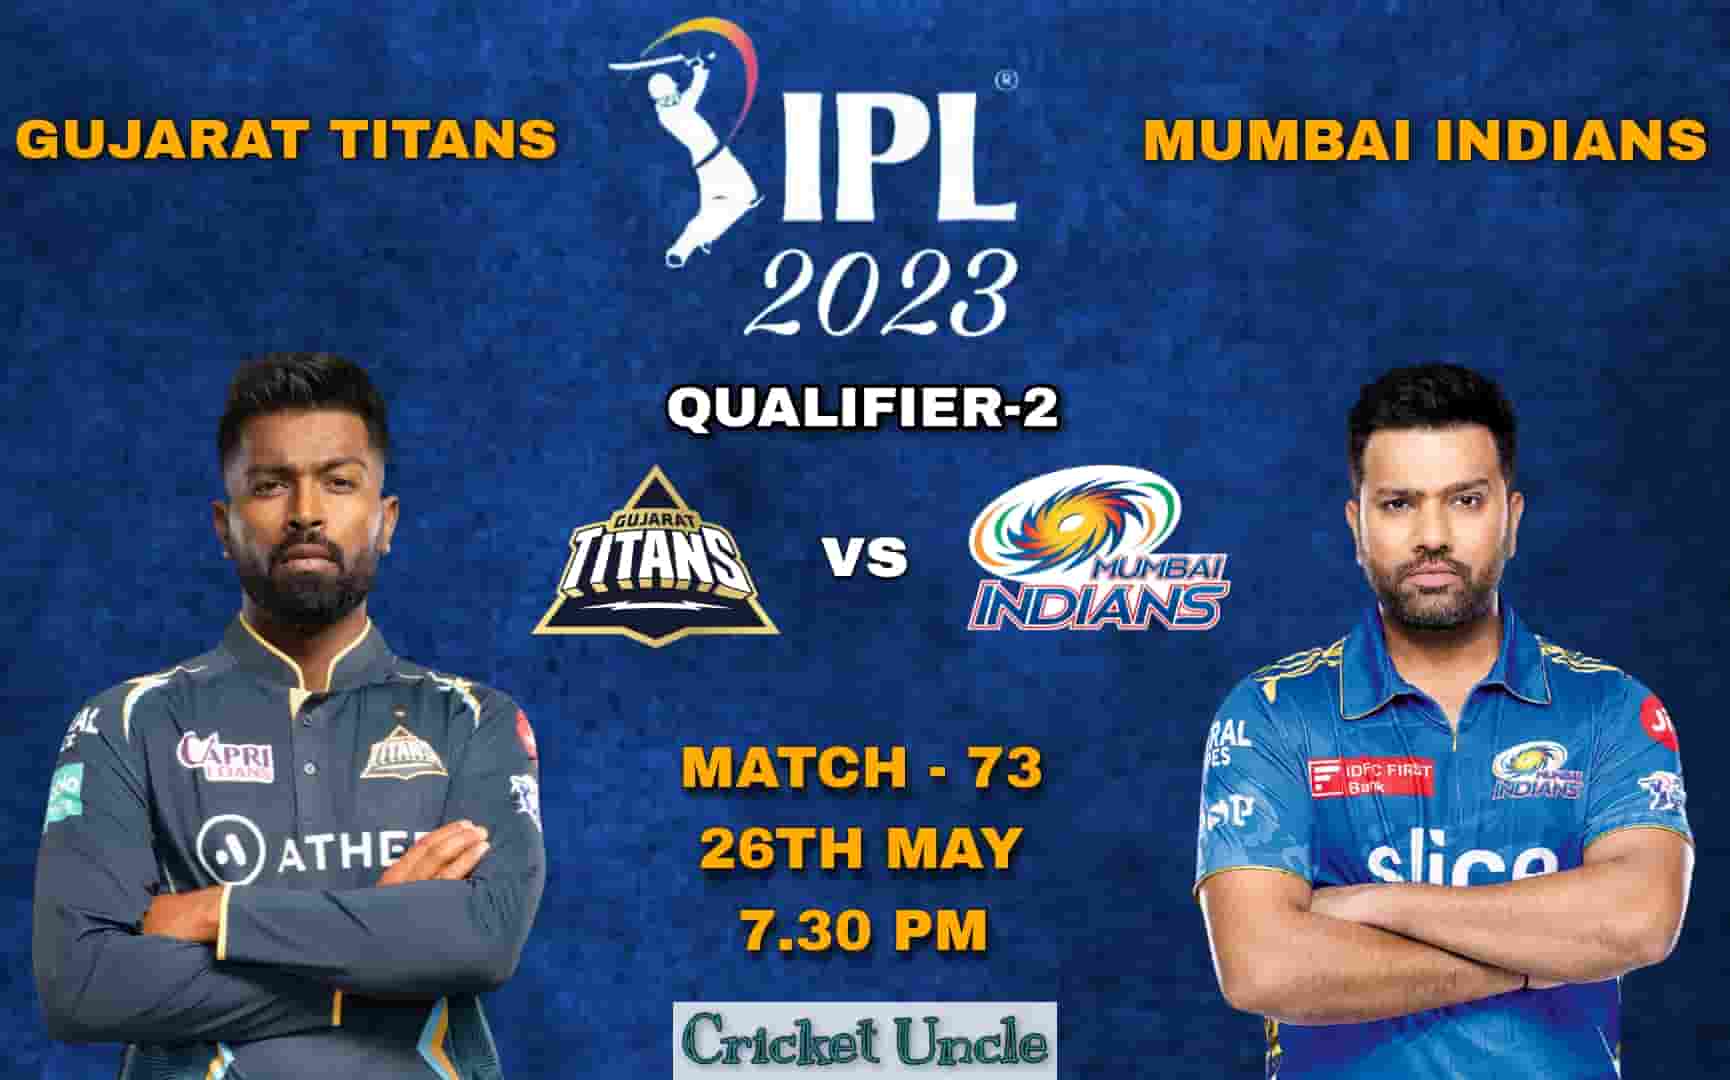 Poster of IPL 2023 Qualifier-2 Match-73 between Gujarat Titans and Mumbai Indians